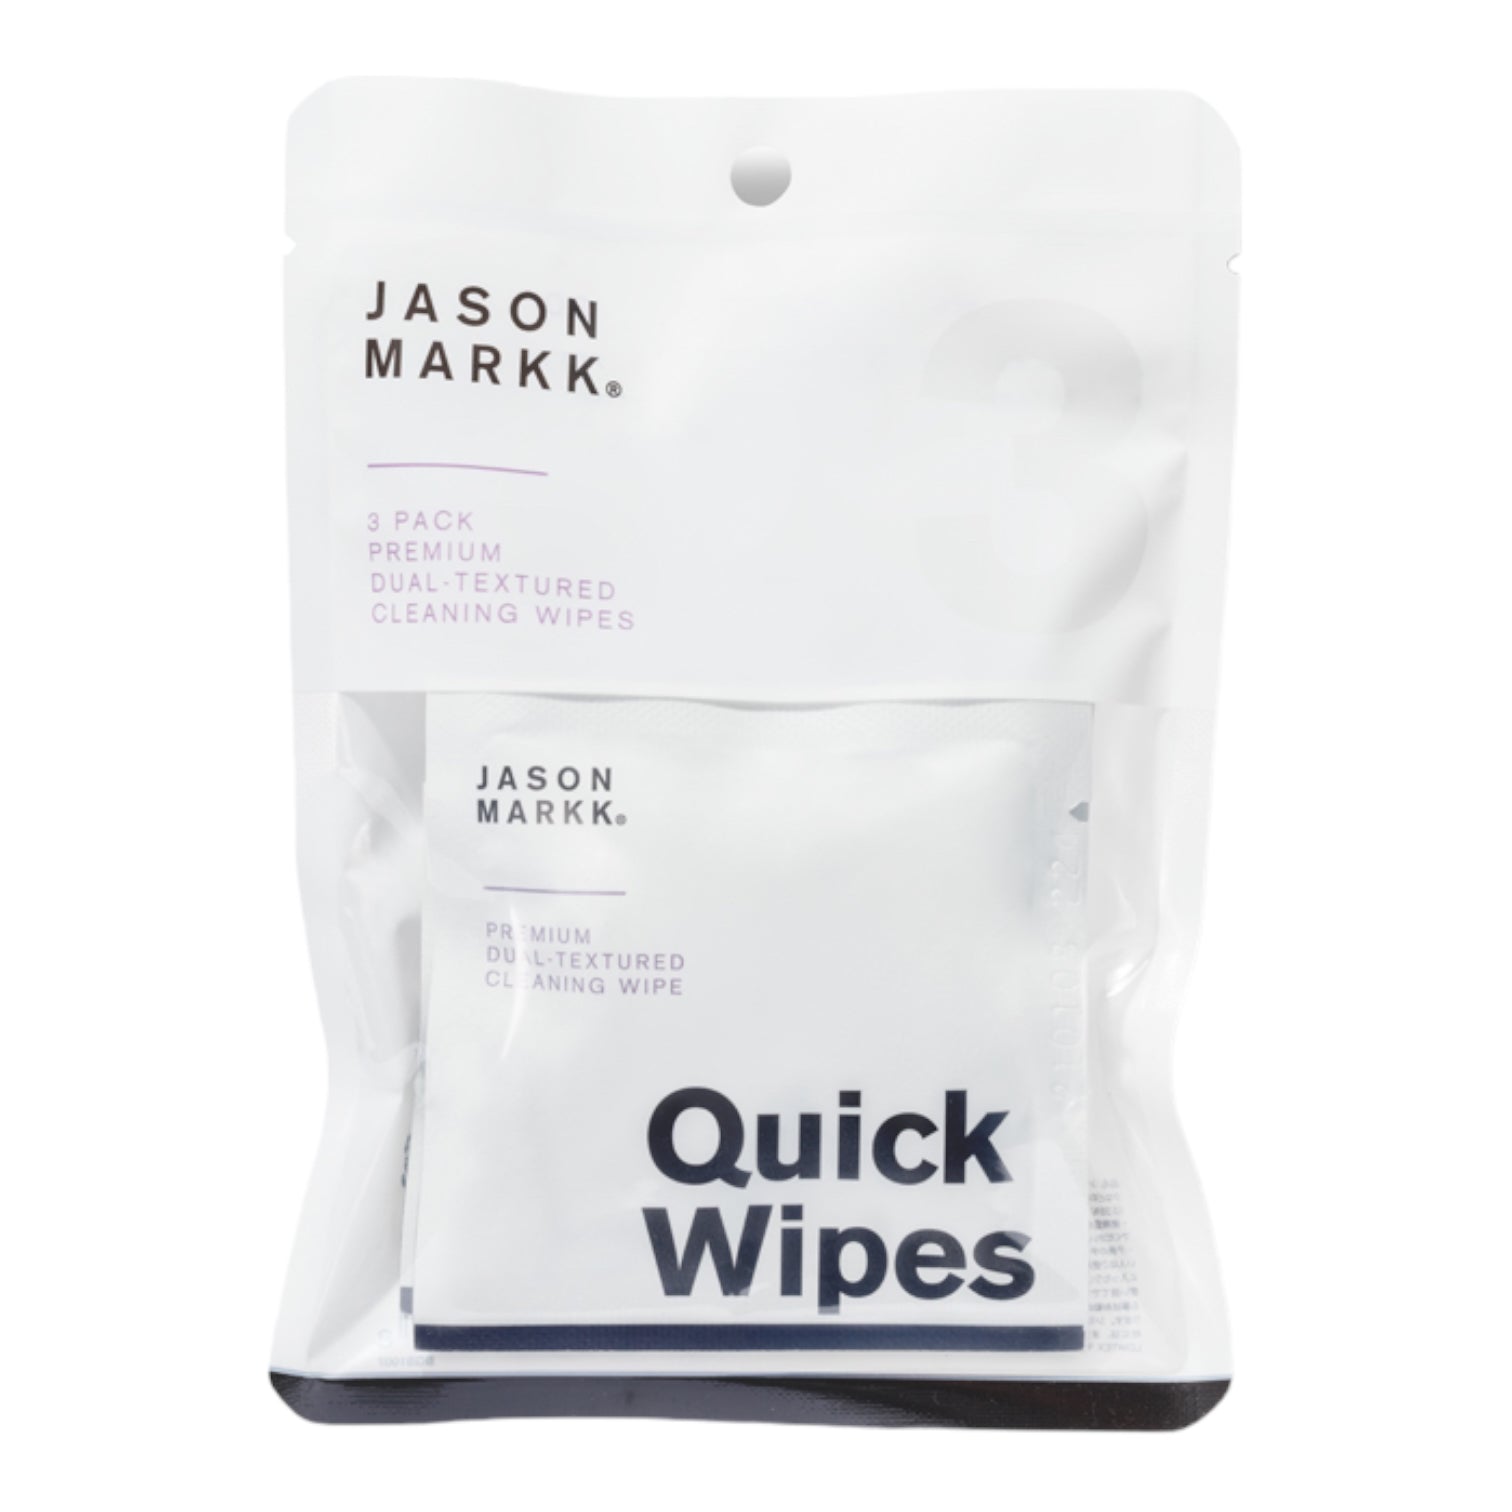 Jason Markk Quick Wipes - 3 Pack